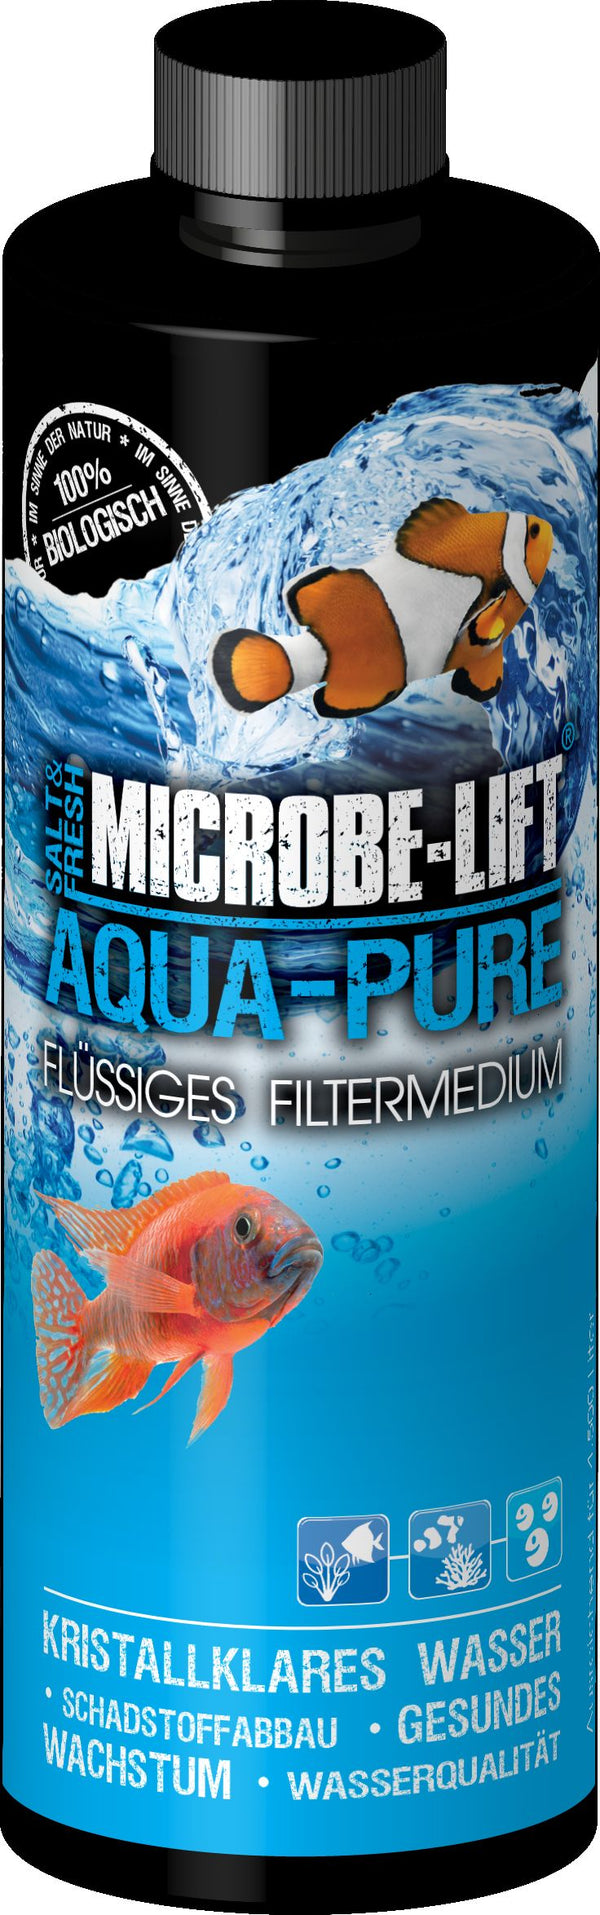 Aqua-Pure - flüssiges Filtermedium mit Bakterien (473 ml.) Microbe-Lift